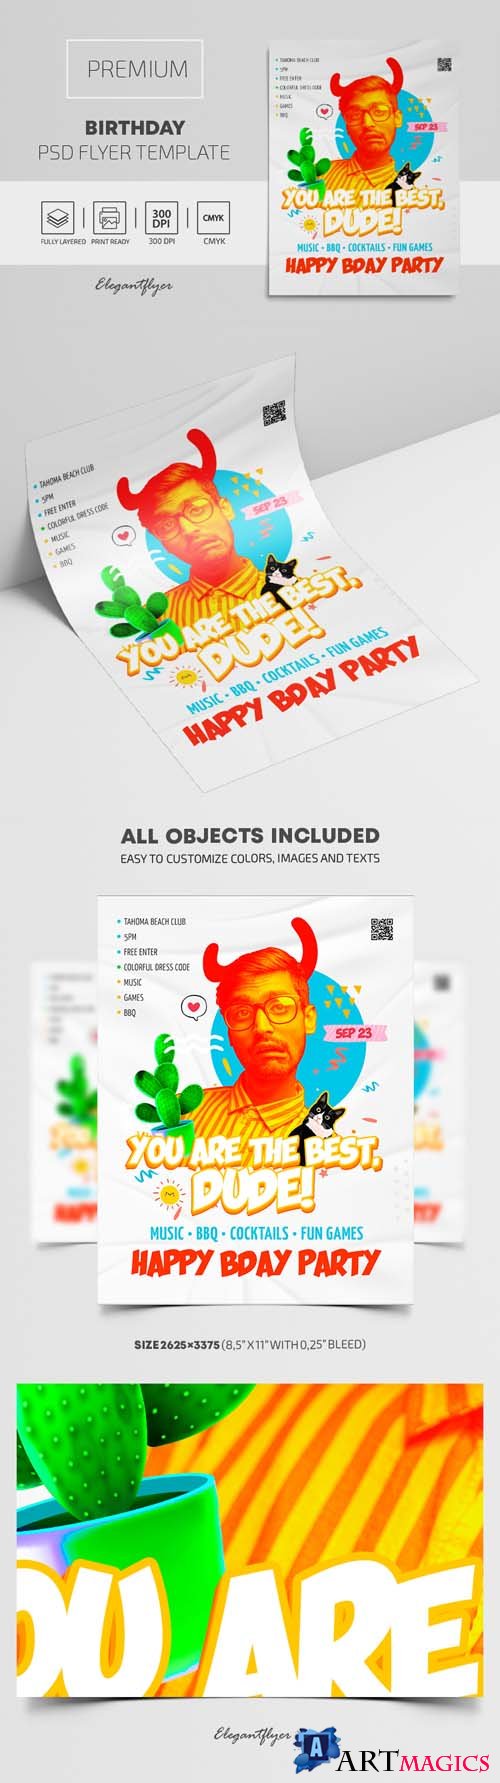 Birthday Premium PSD Flyer Template